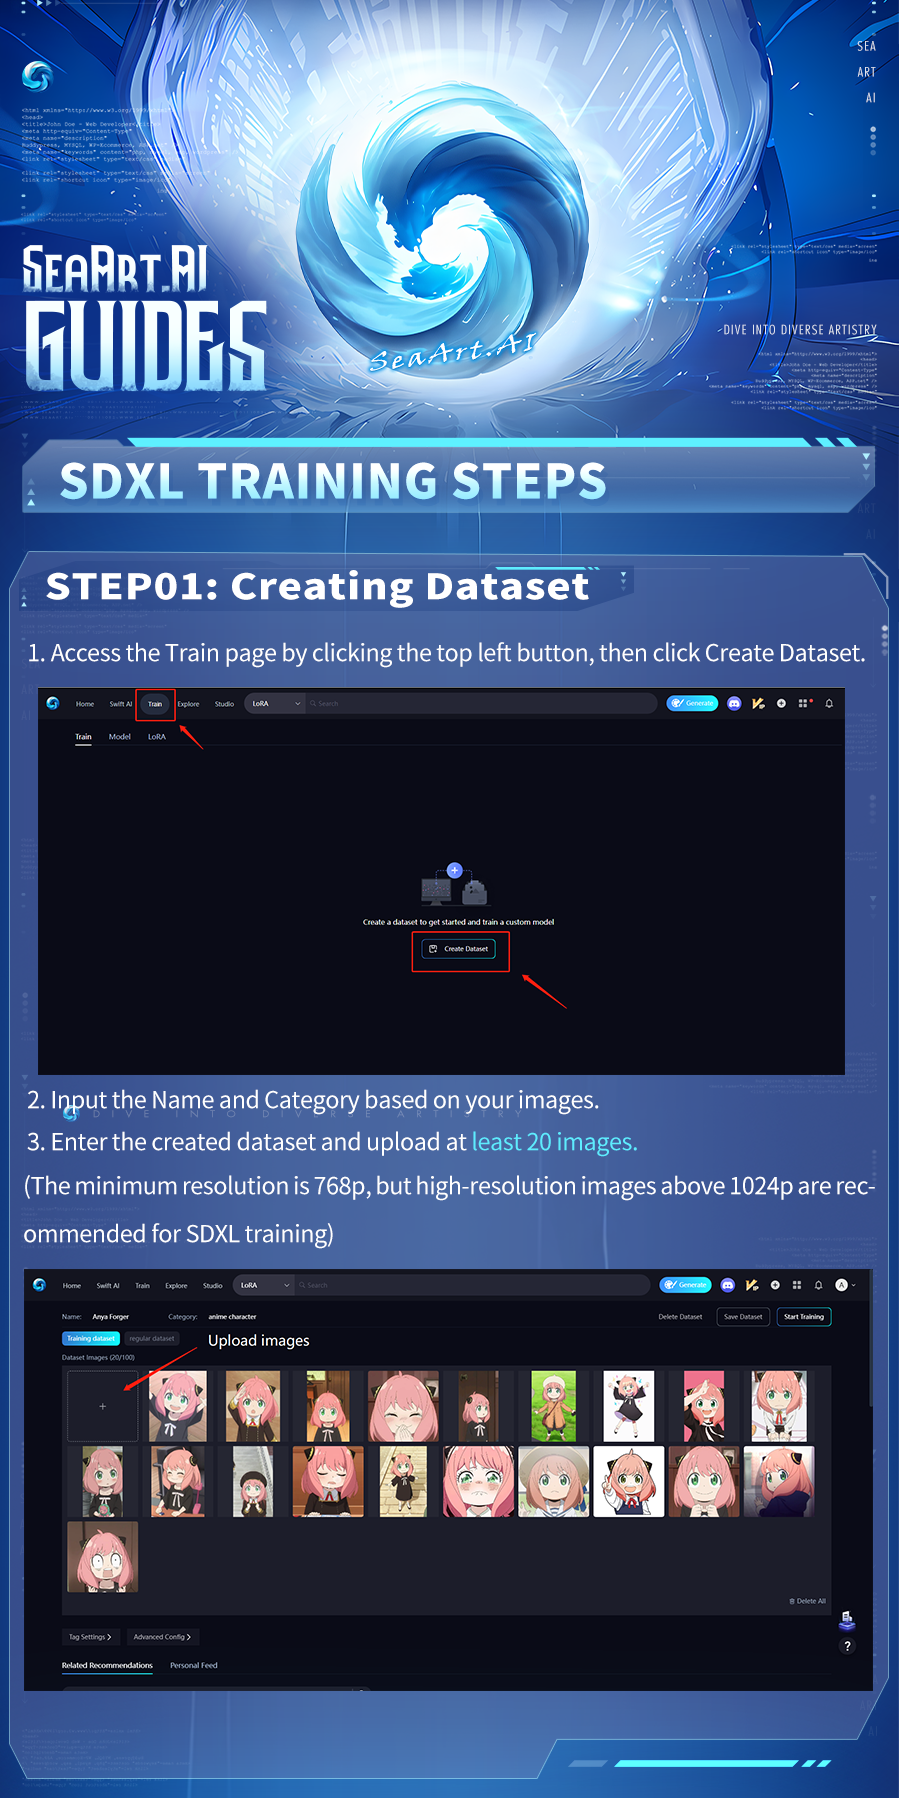 SDXL Training steps